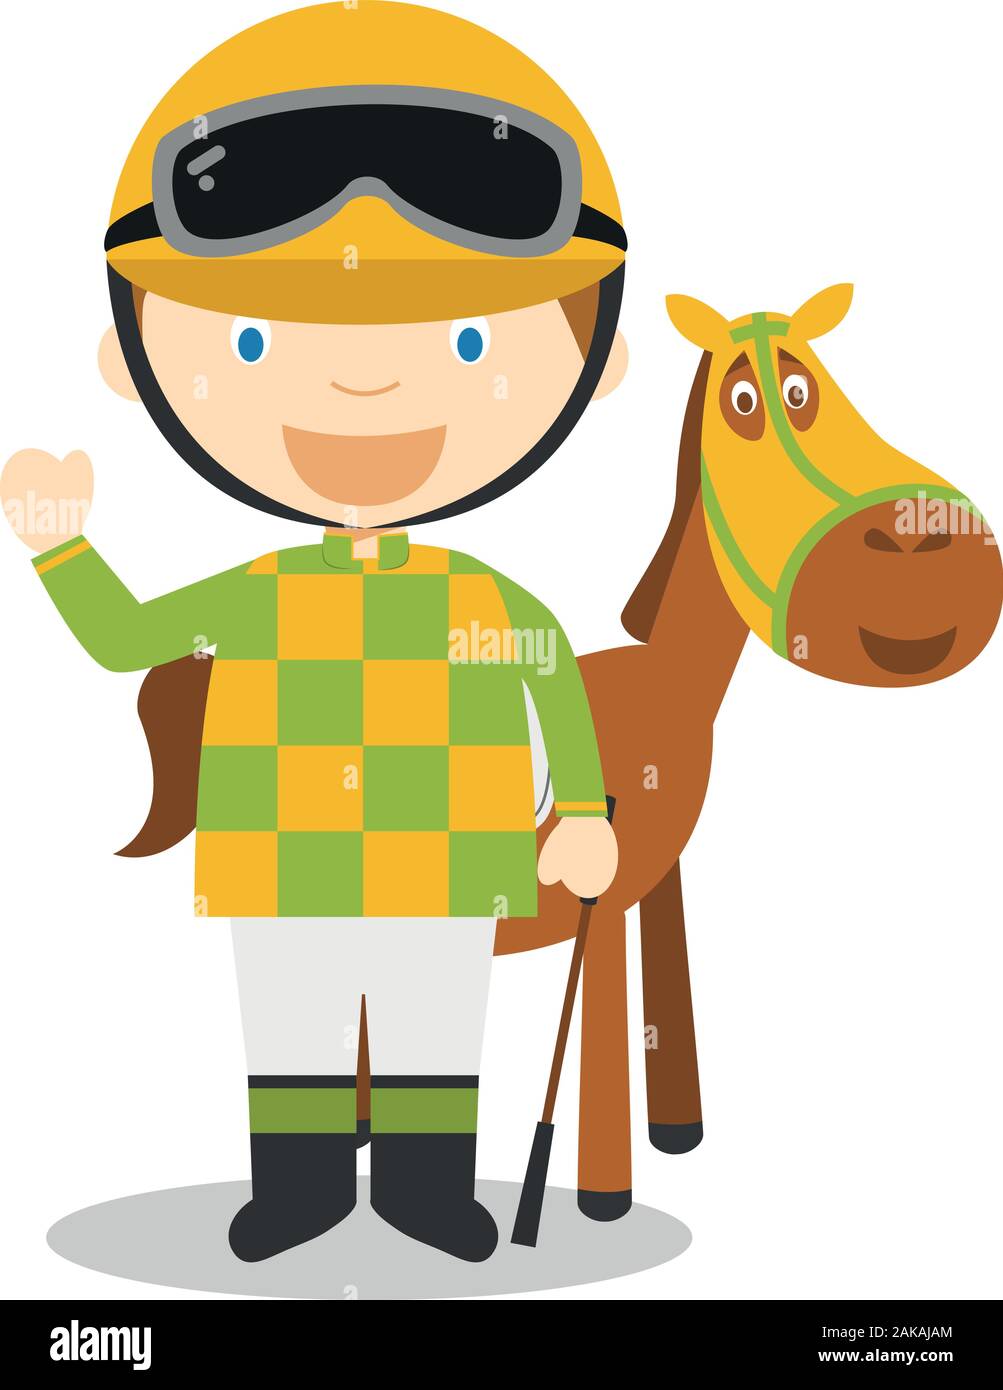 Sports cartoon vector illustrations: Horse Racing Stock Vector